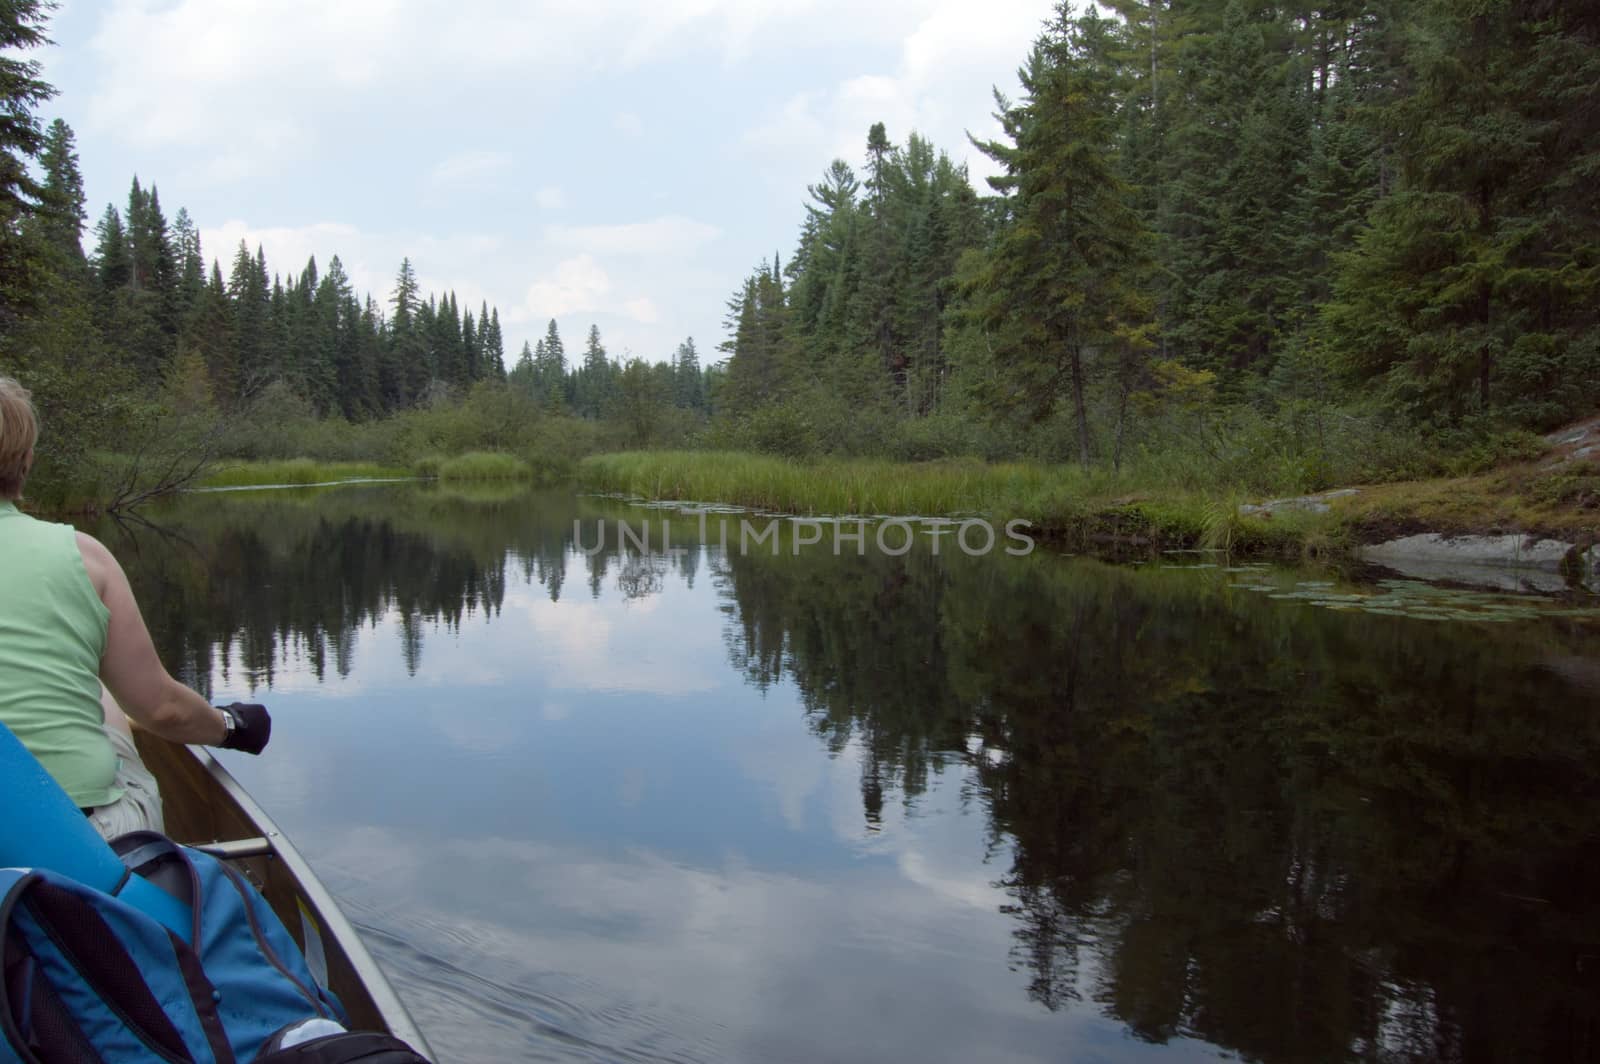 Canoe trip in calm lake in Algonquin Park